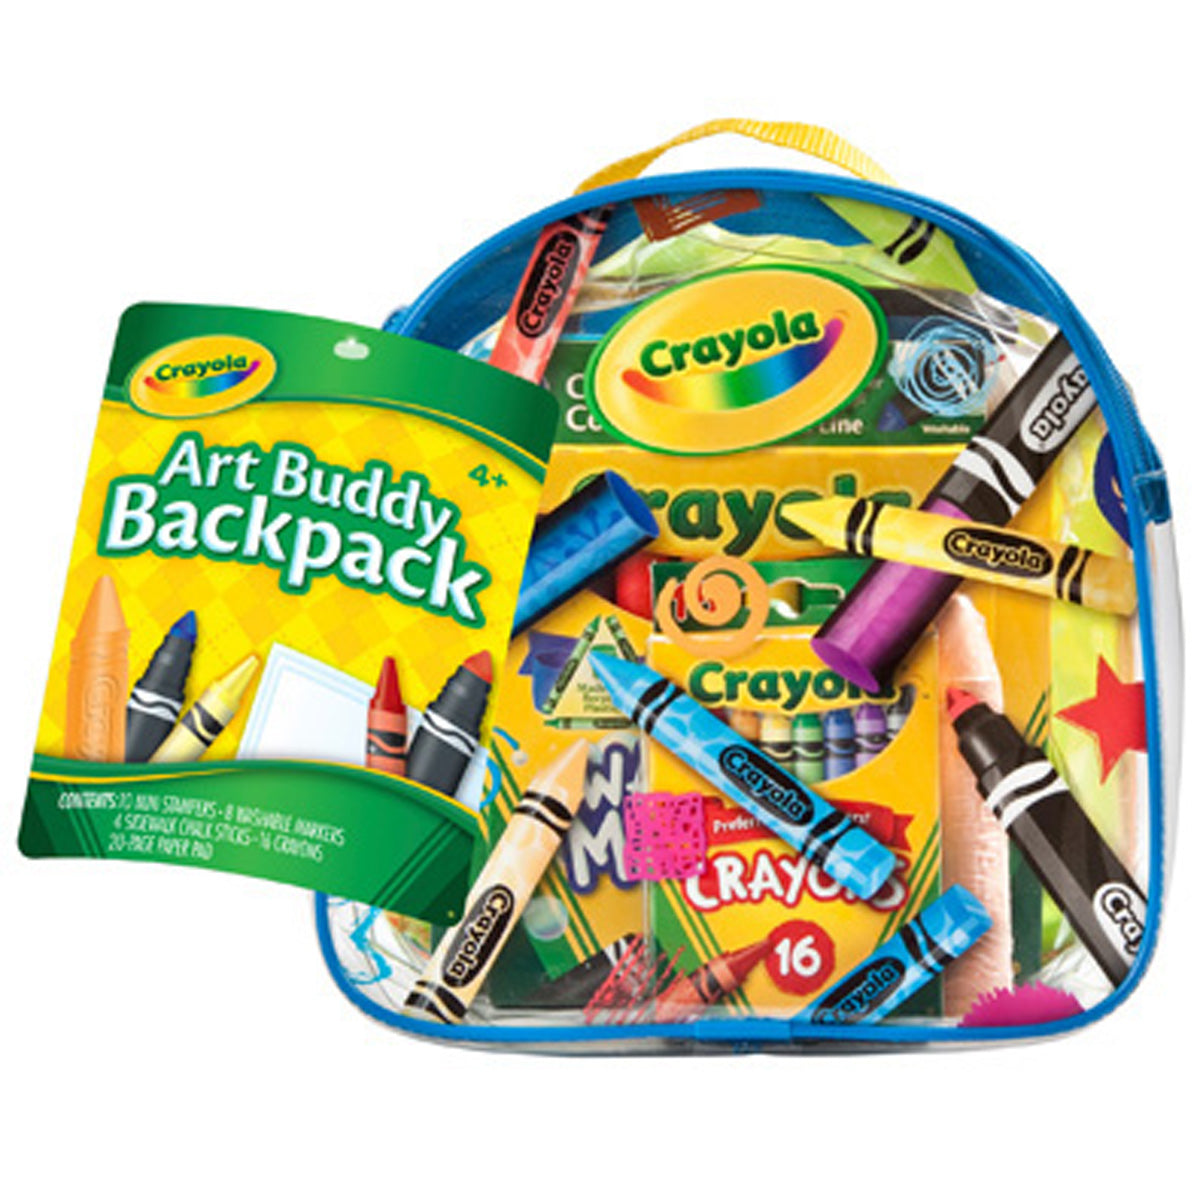 Crayola Art Buddy Backpack